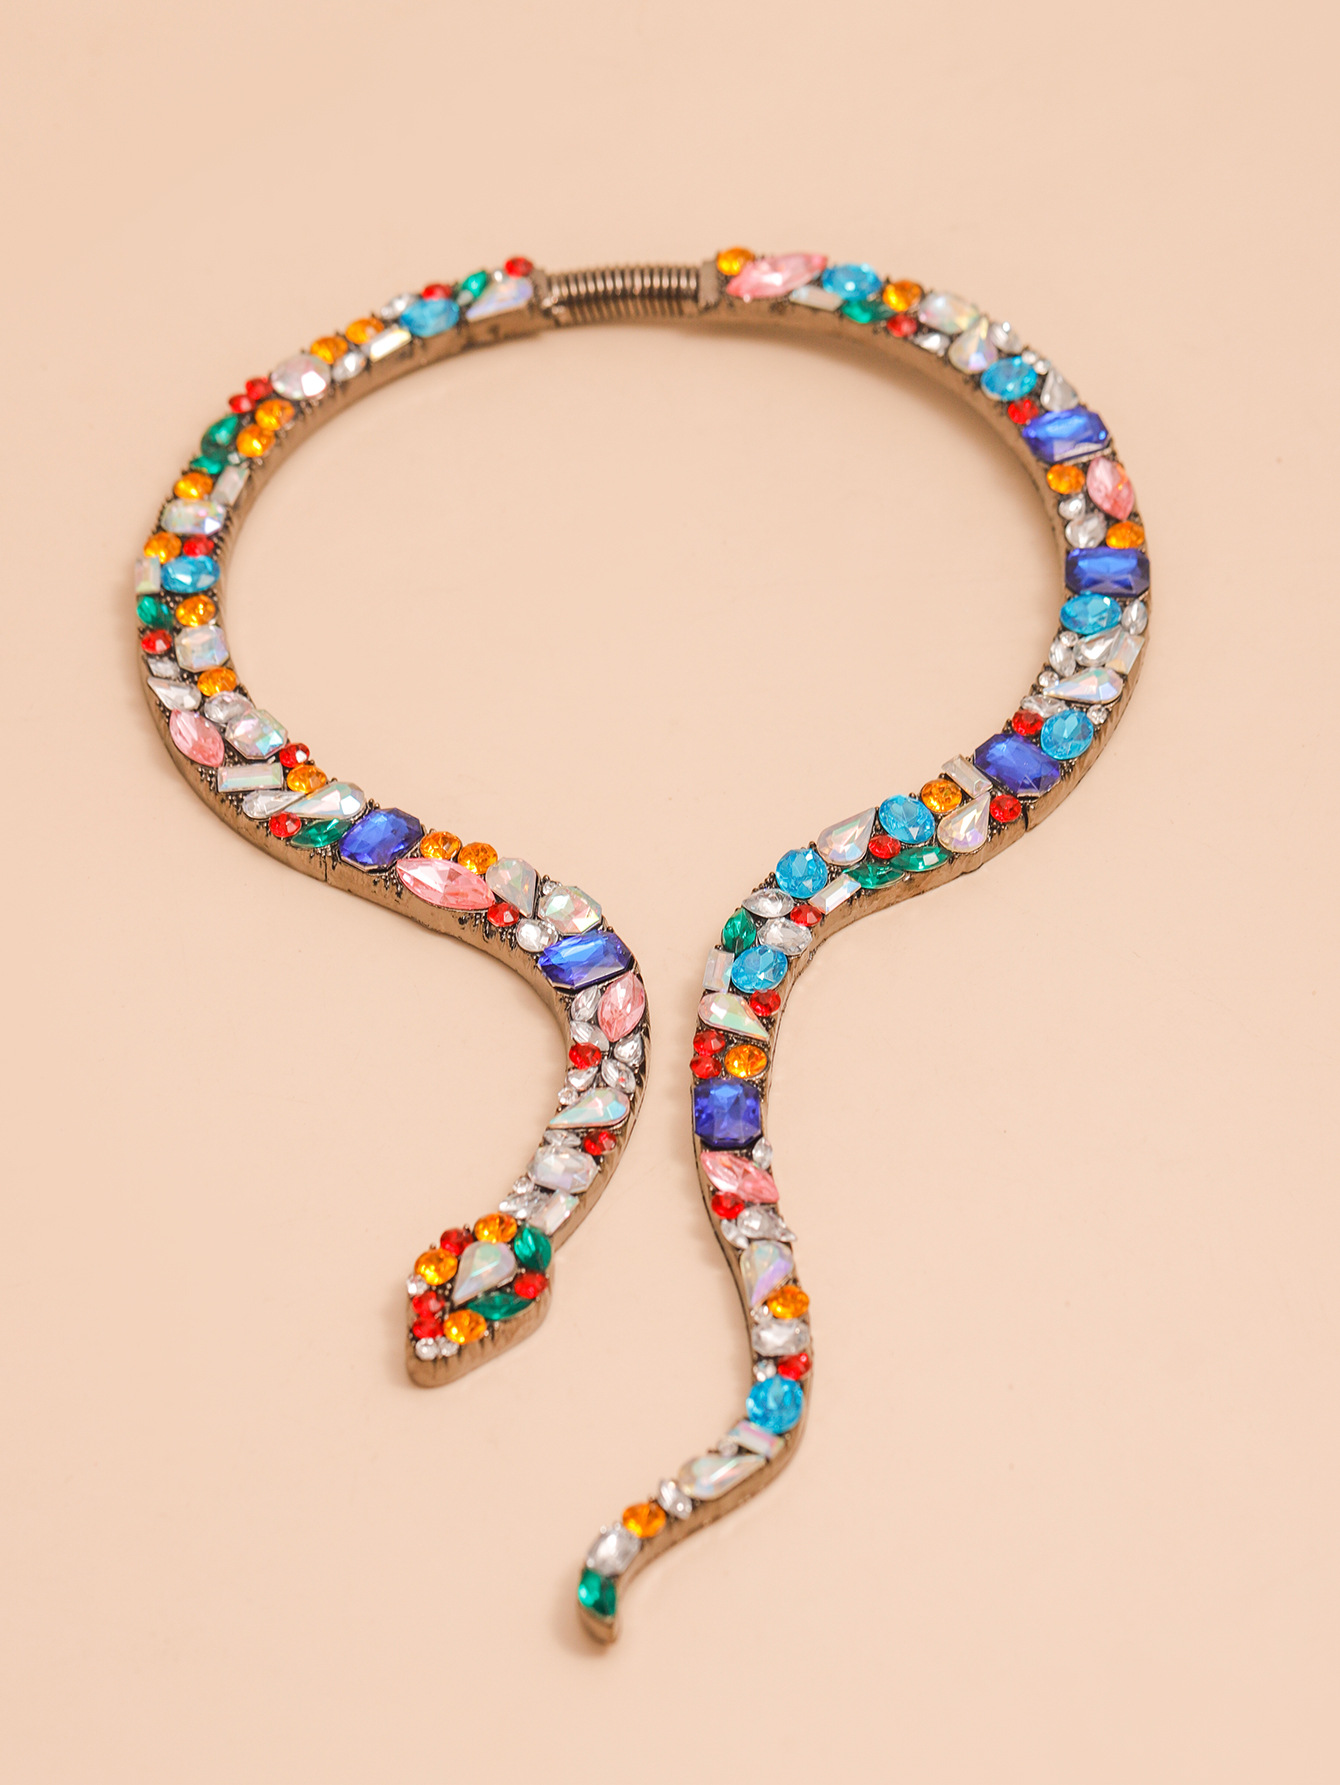 vibrant colors snake necklace